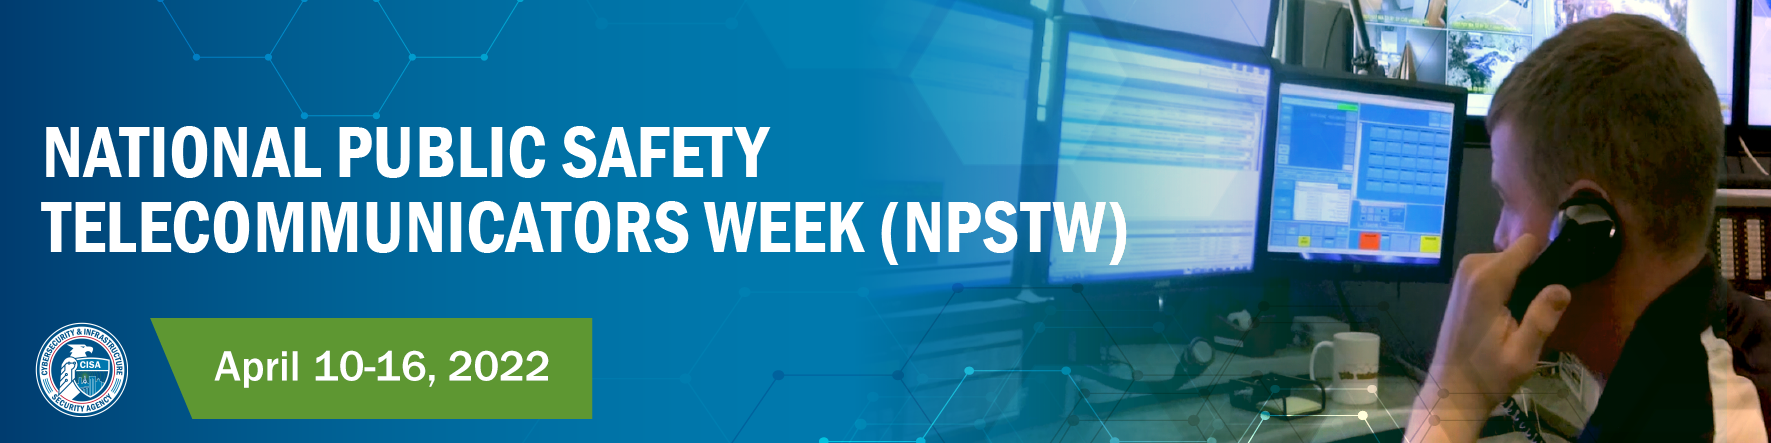 National Public Safety Telecommunicators Week (NPSTW) April 10-16, 2022